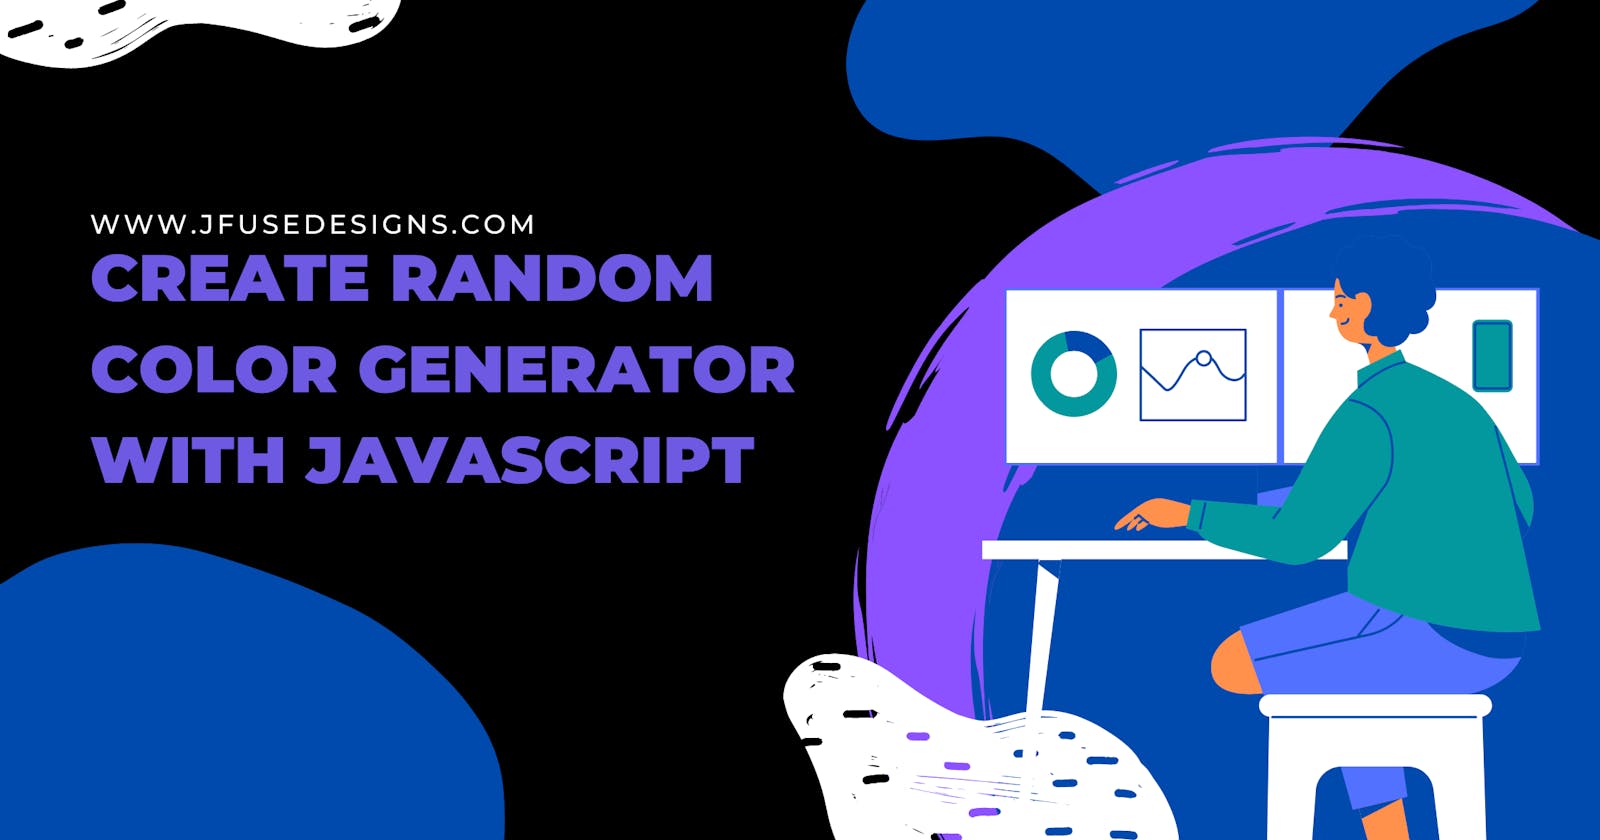 Create a Random Color Generator with Javascript